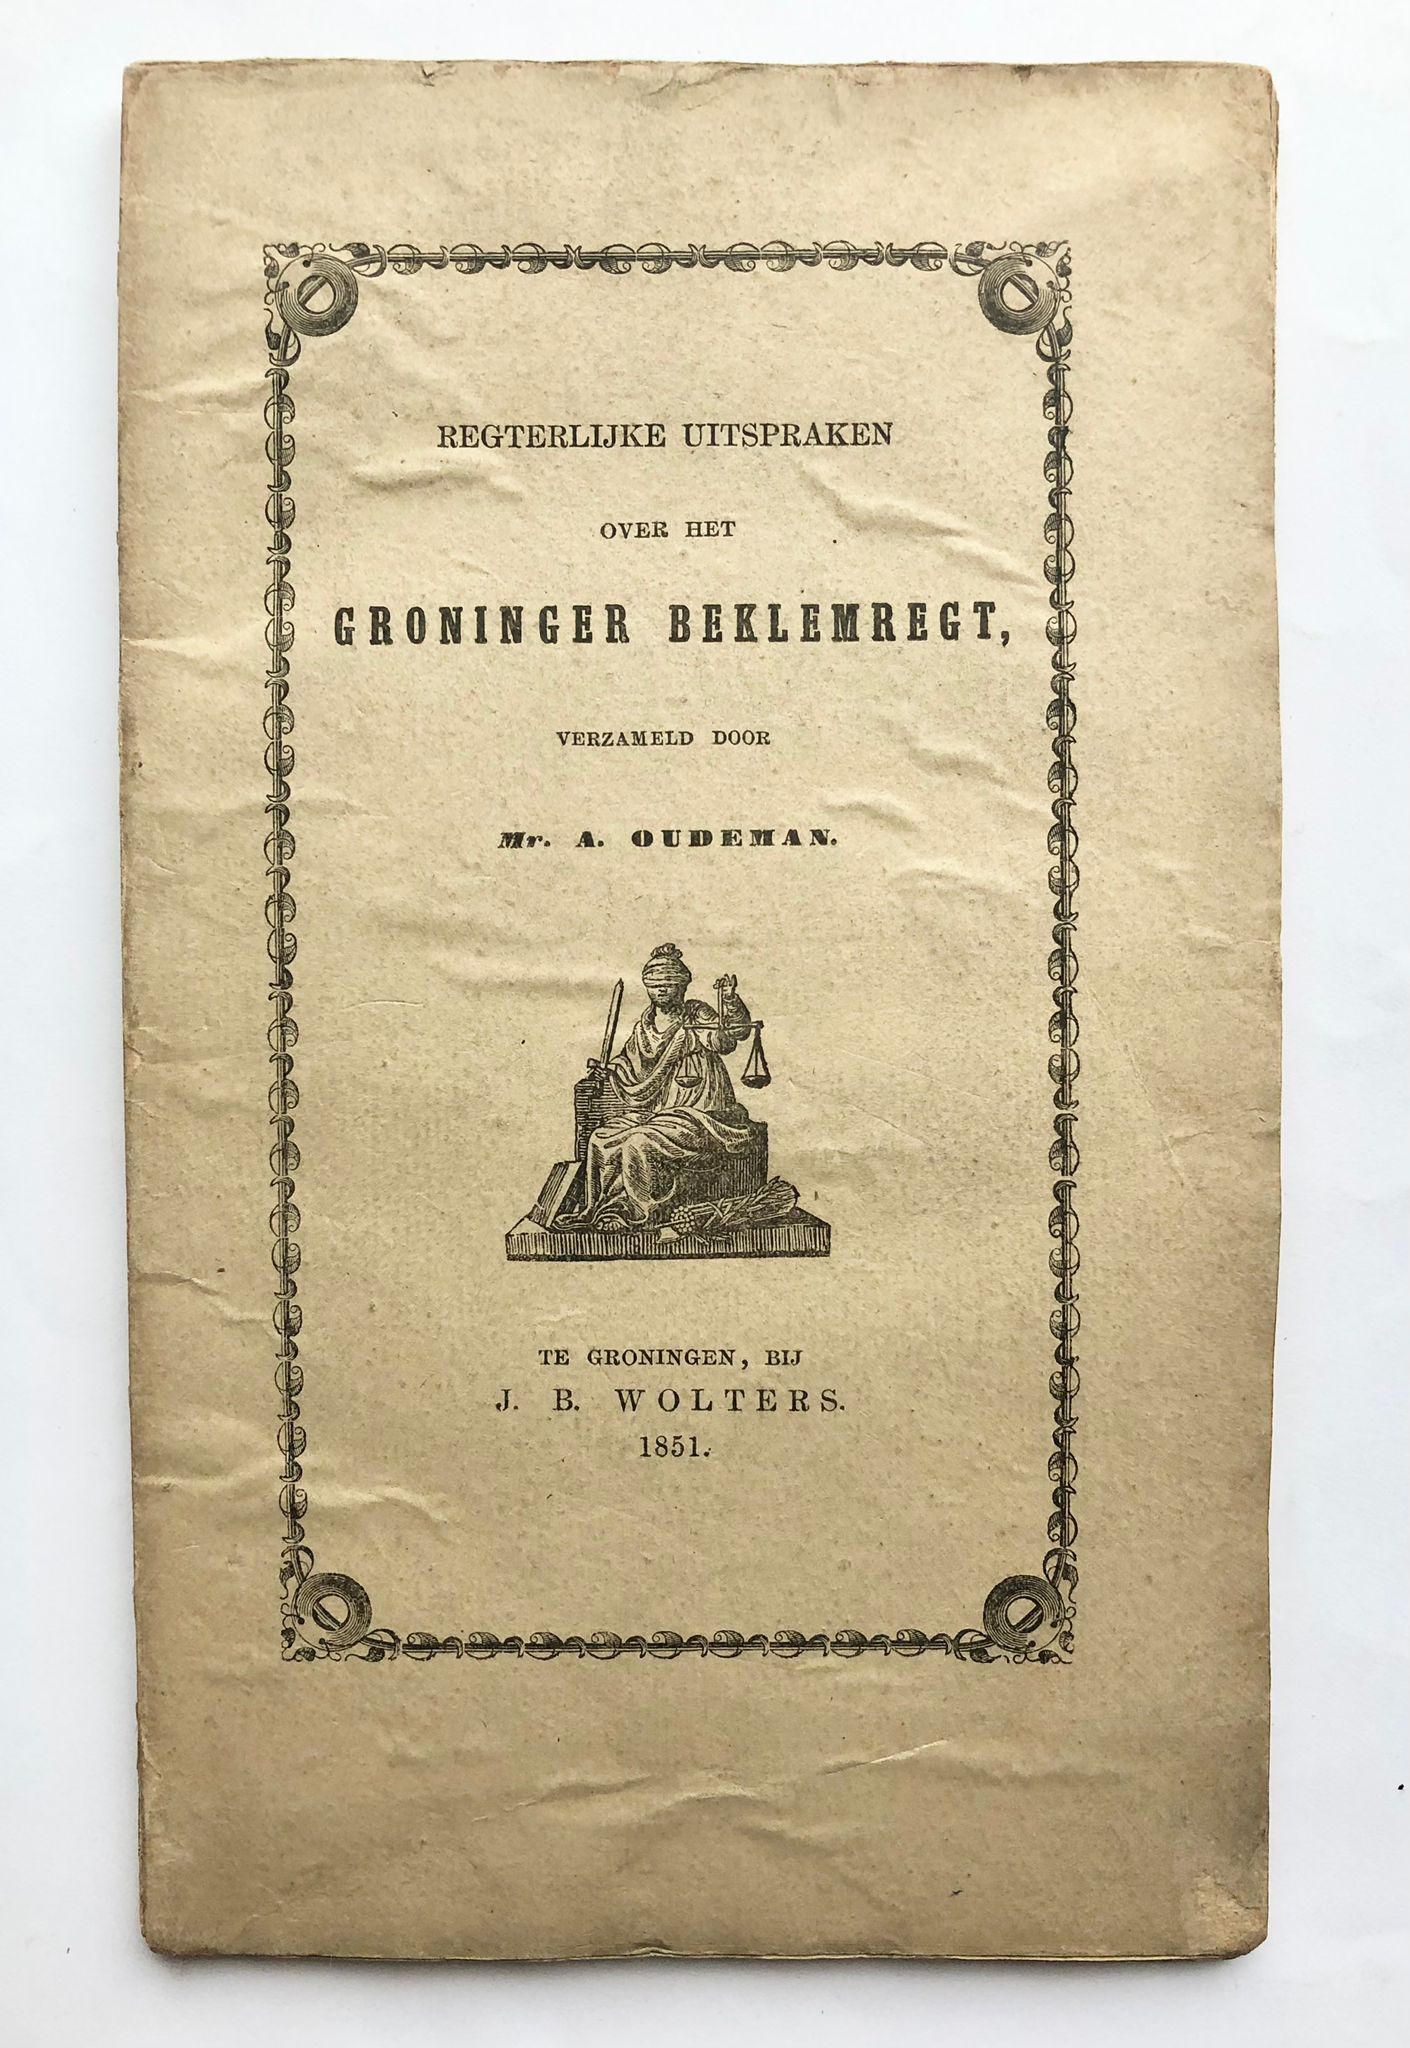 [Groningen, first edition] Regterlijke uitspraken over het Groninger beklemregt, J. B. Wolters, Te Groningen, 1851, 95 pp.